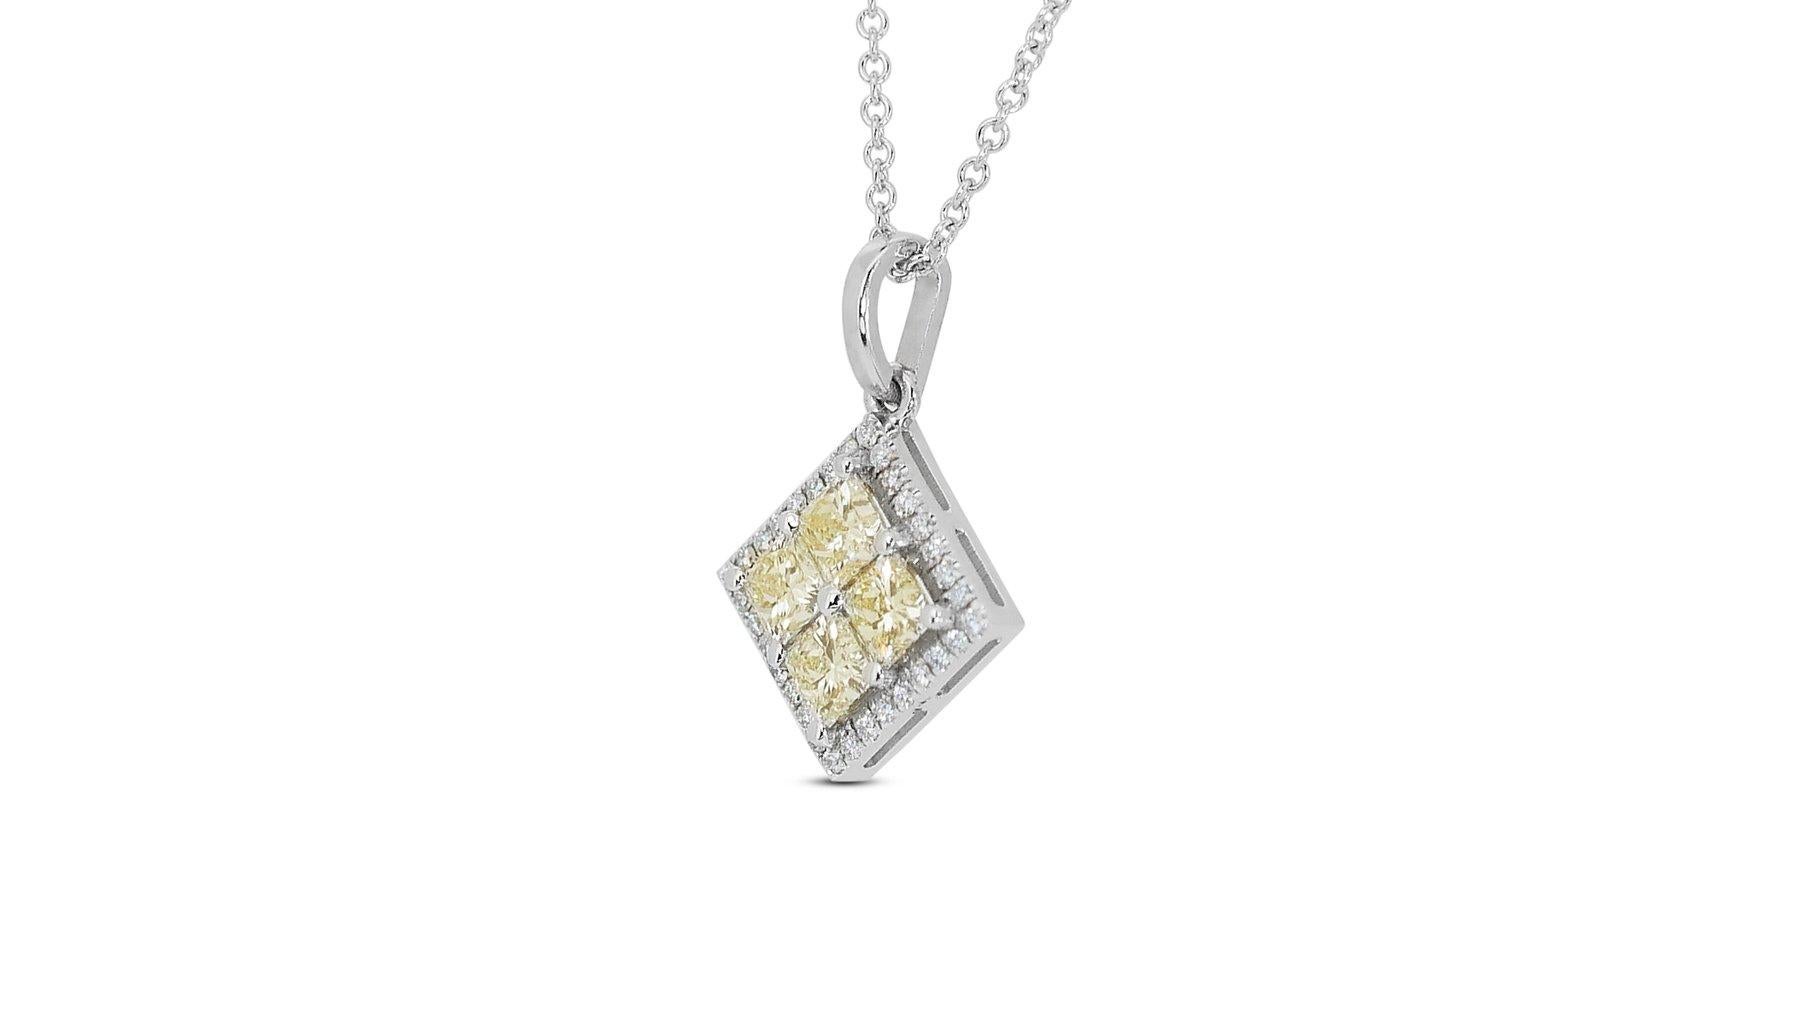 Princess Cut Stunning 18K White Gold Necklace with a Dazzling 1.04 carat Princess cut Diamond